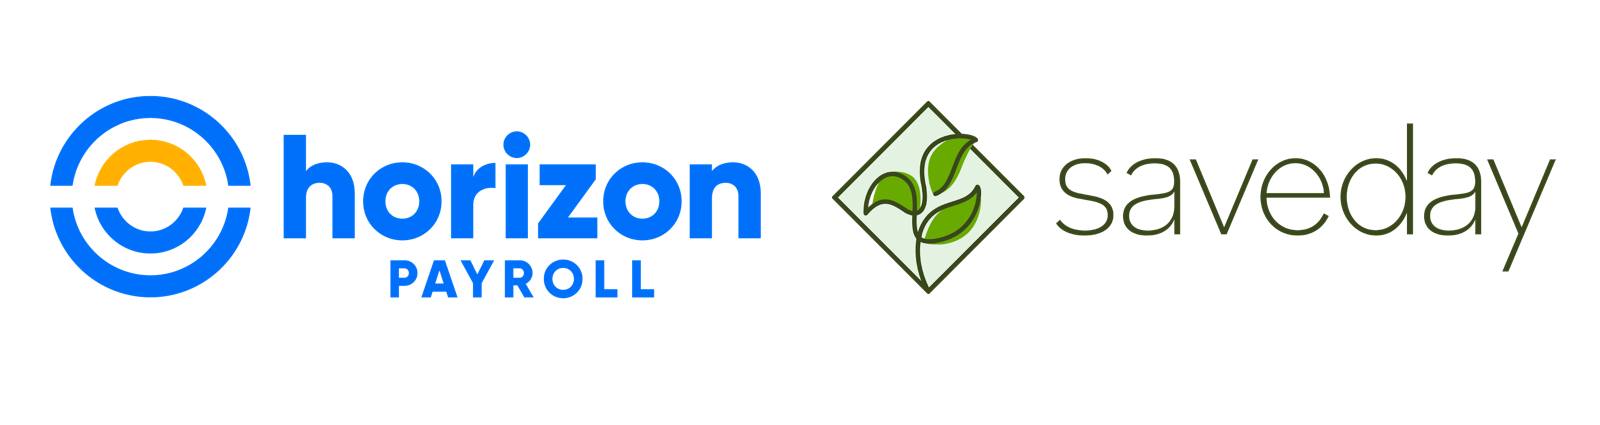 Horizon-saveday-logos